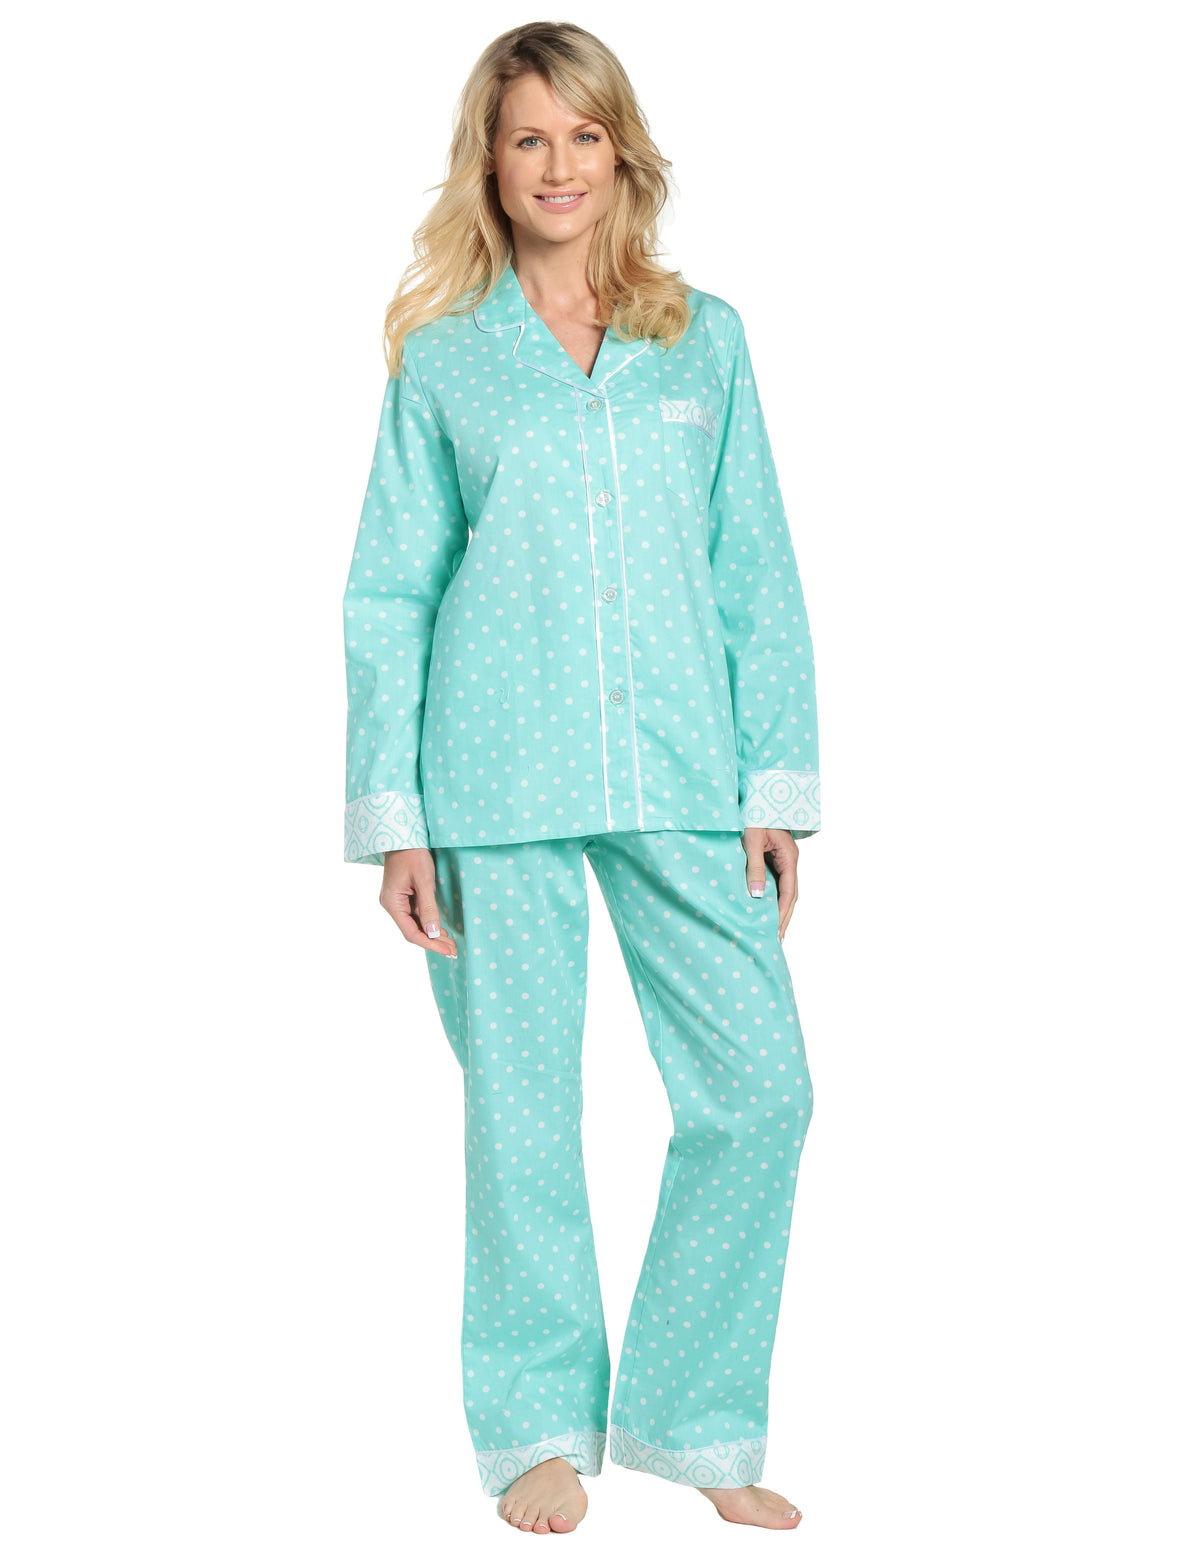 Womens Premium 100% Cotton Poplin Pajama Set with Contrast Cuffs - Dots Diva Aqua-White